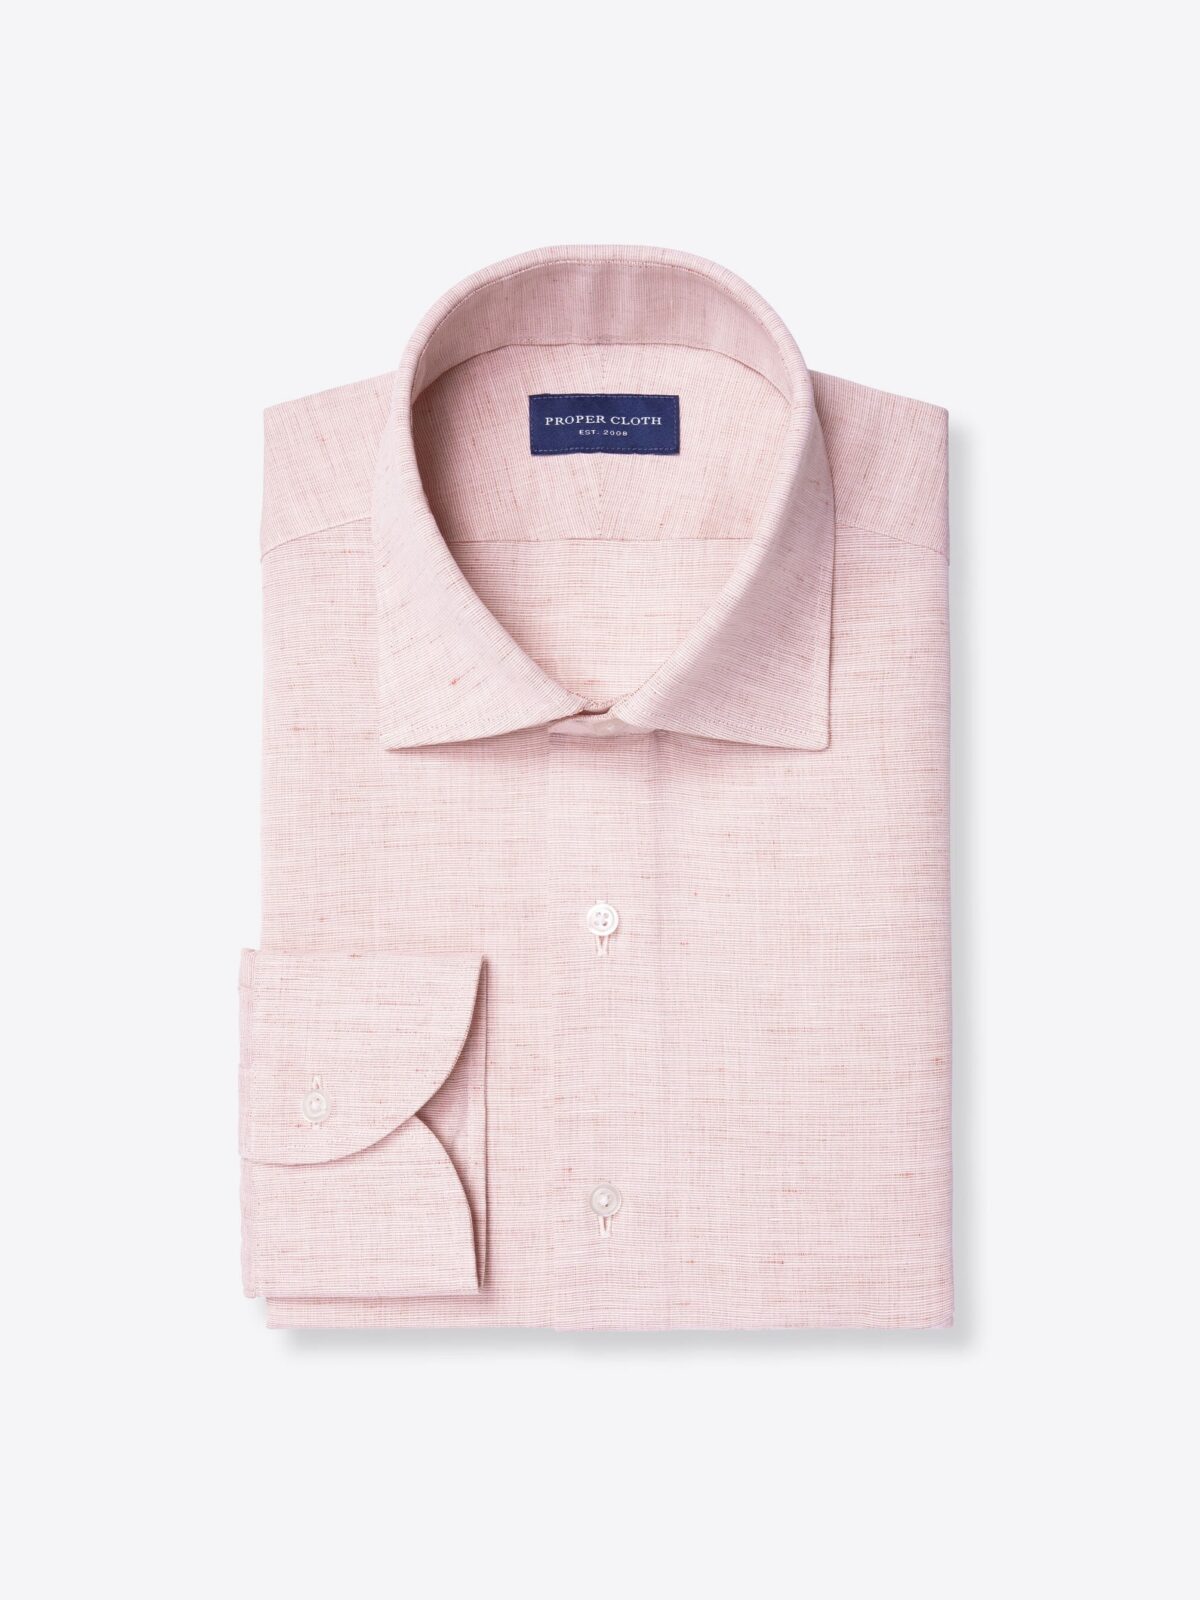 Coral 120s Cotton and Linen Plain Weave Shirt by Proper Cloth